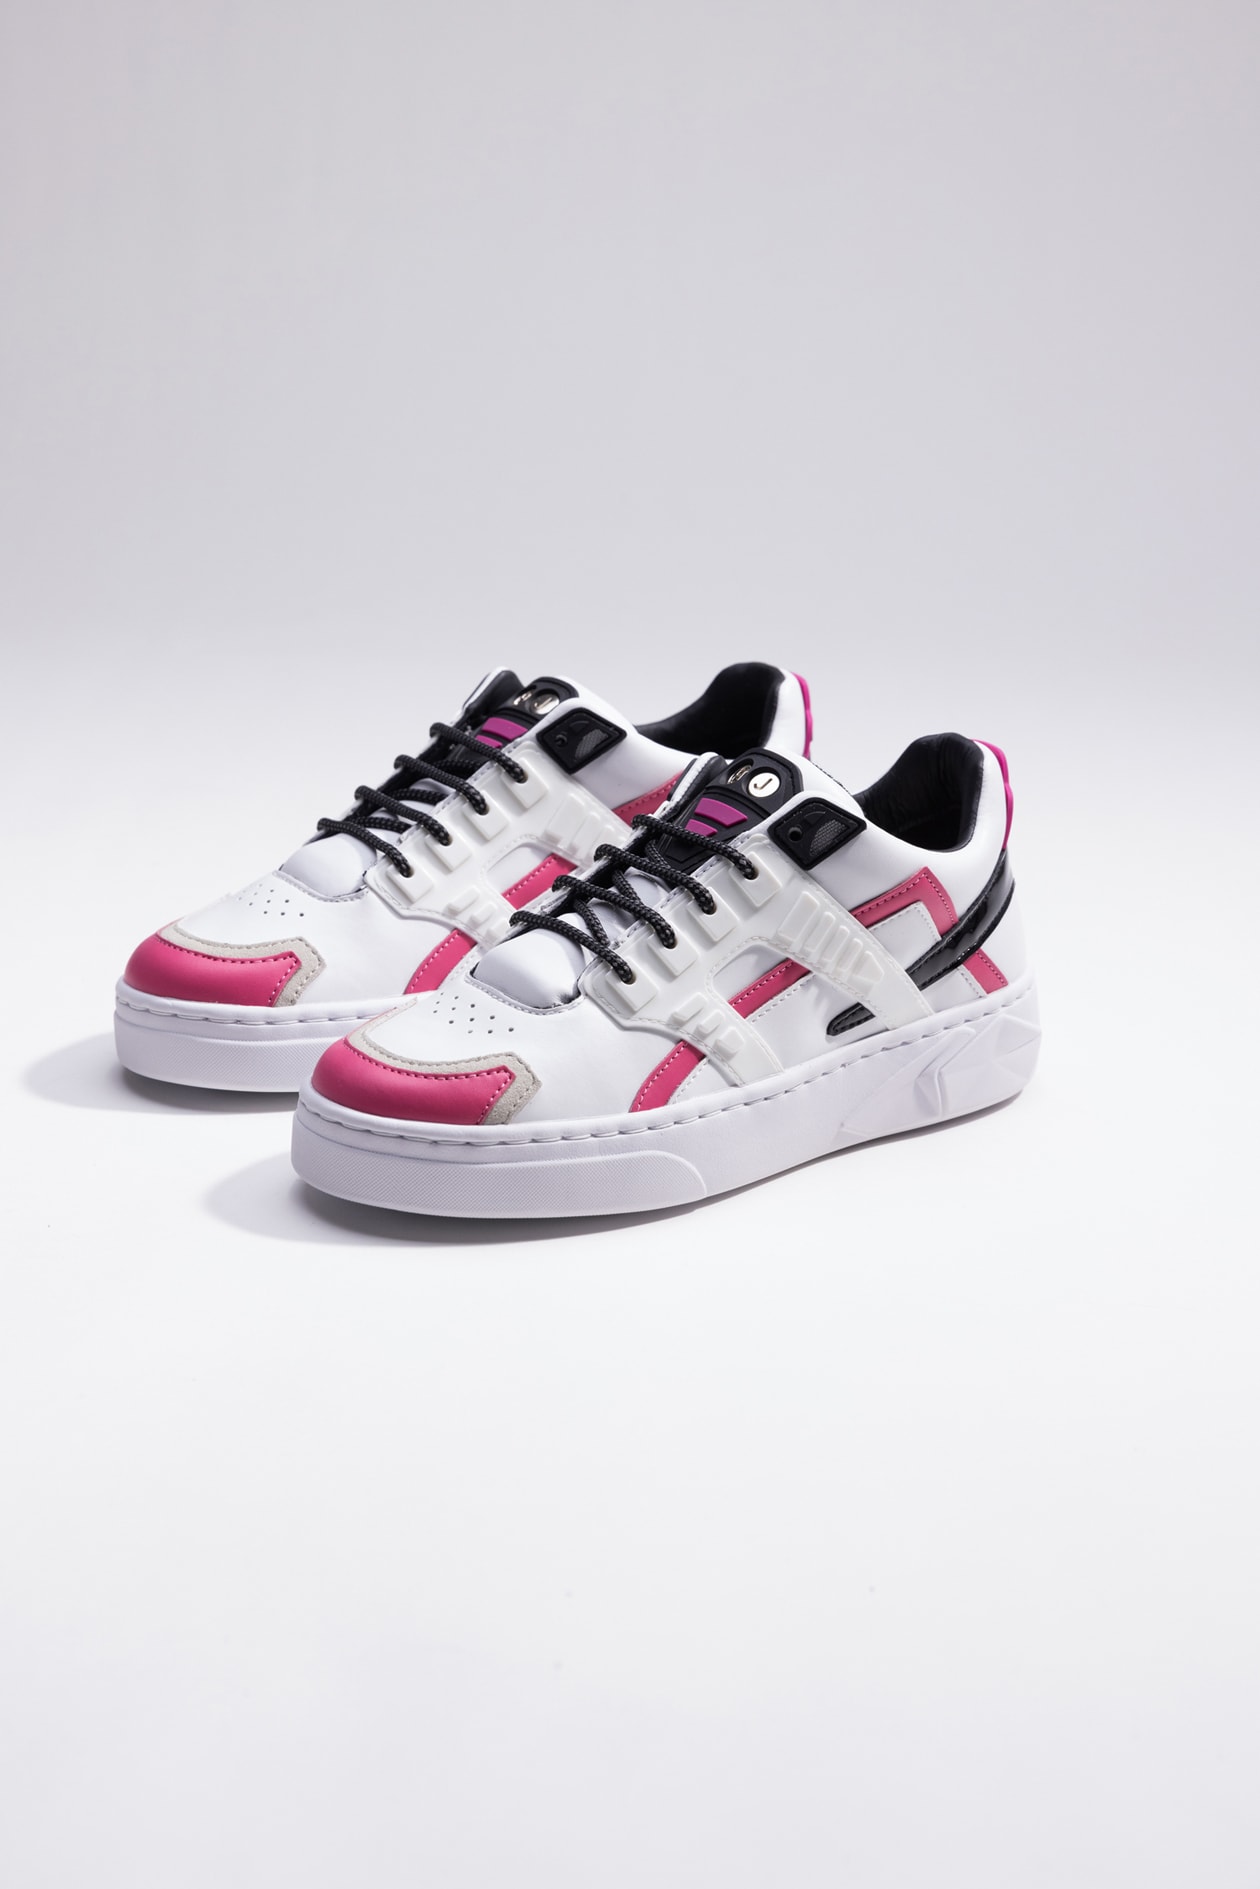 Hide&amp;jack Low Top Sneaker - Mini Silverstone Pink White